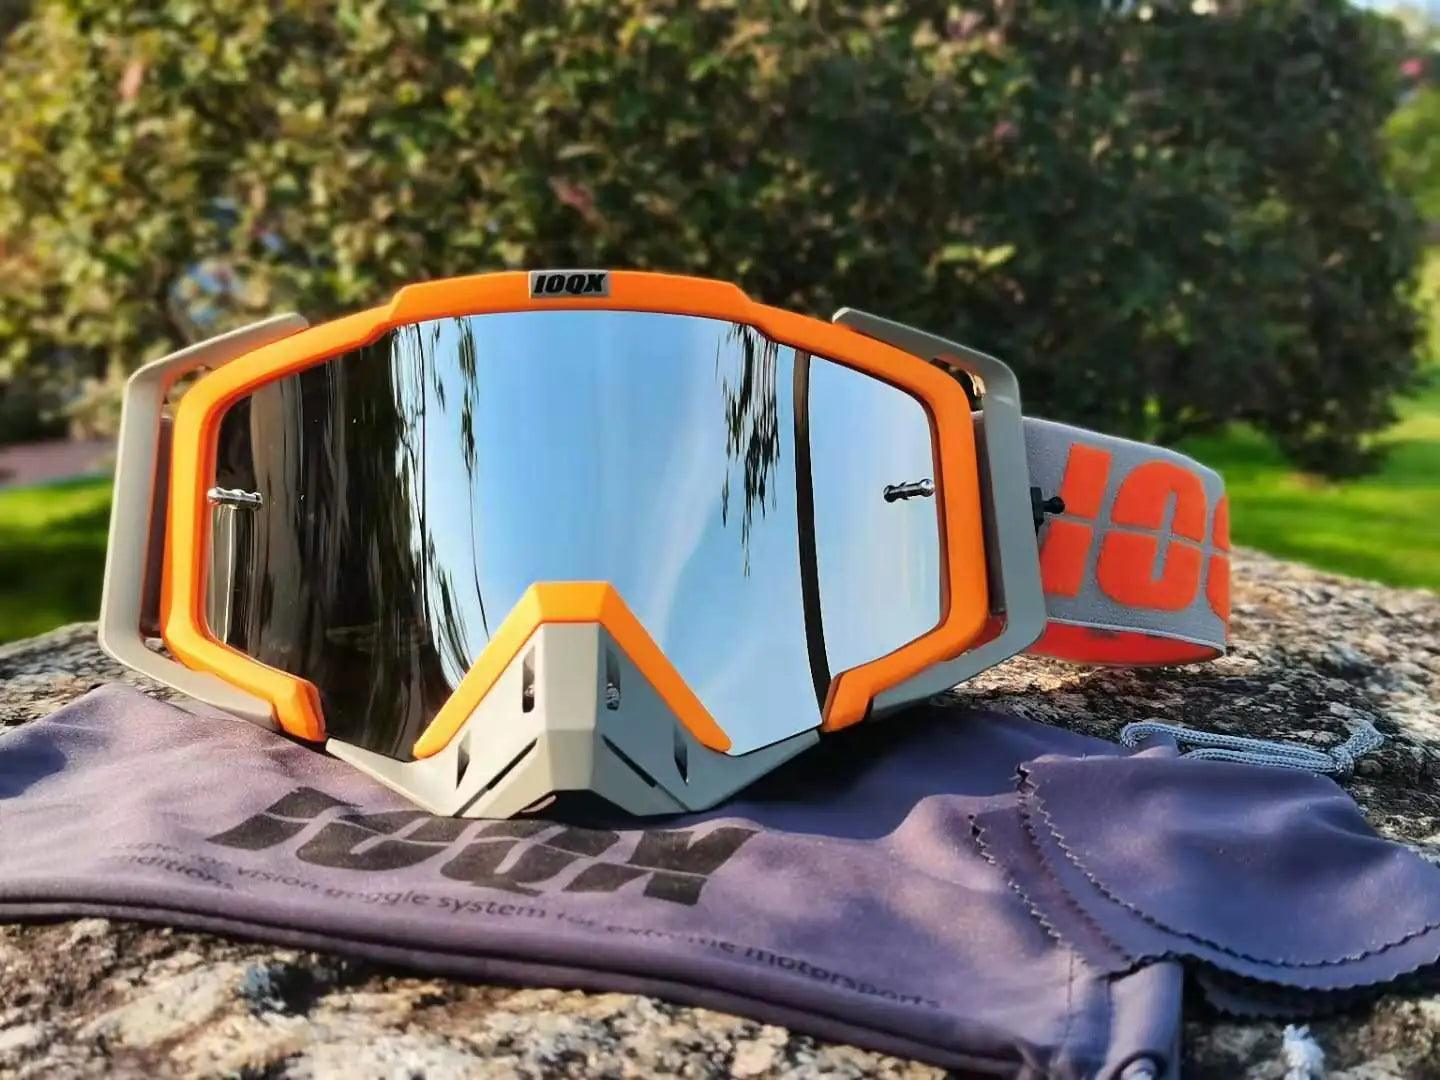 IOQX Motocross Goggles Glasses - ACO Marketplace